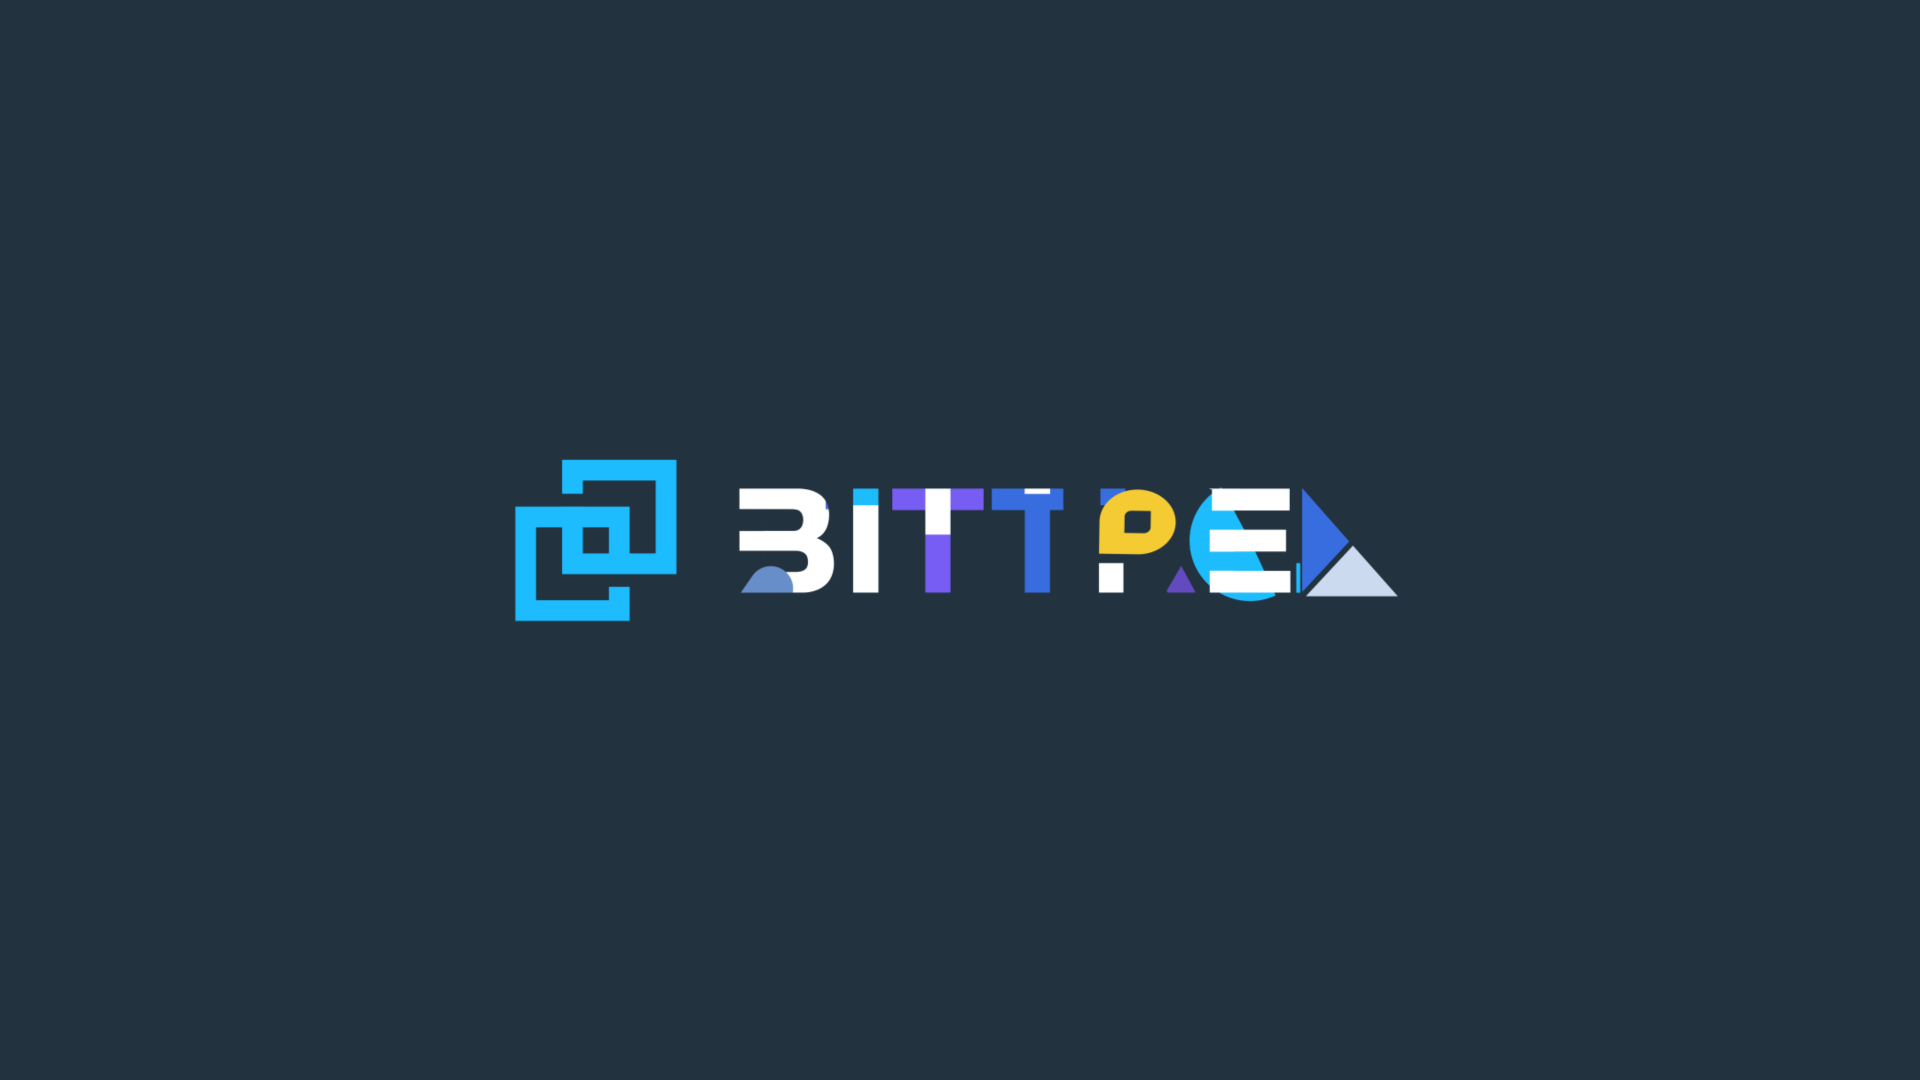 Bittrex campaign video graphics